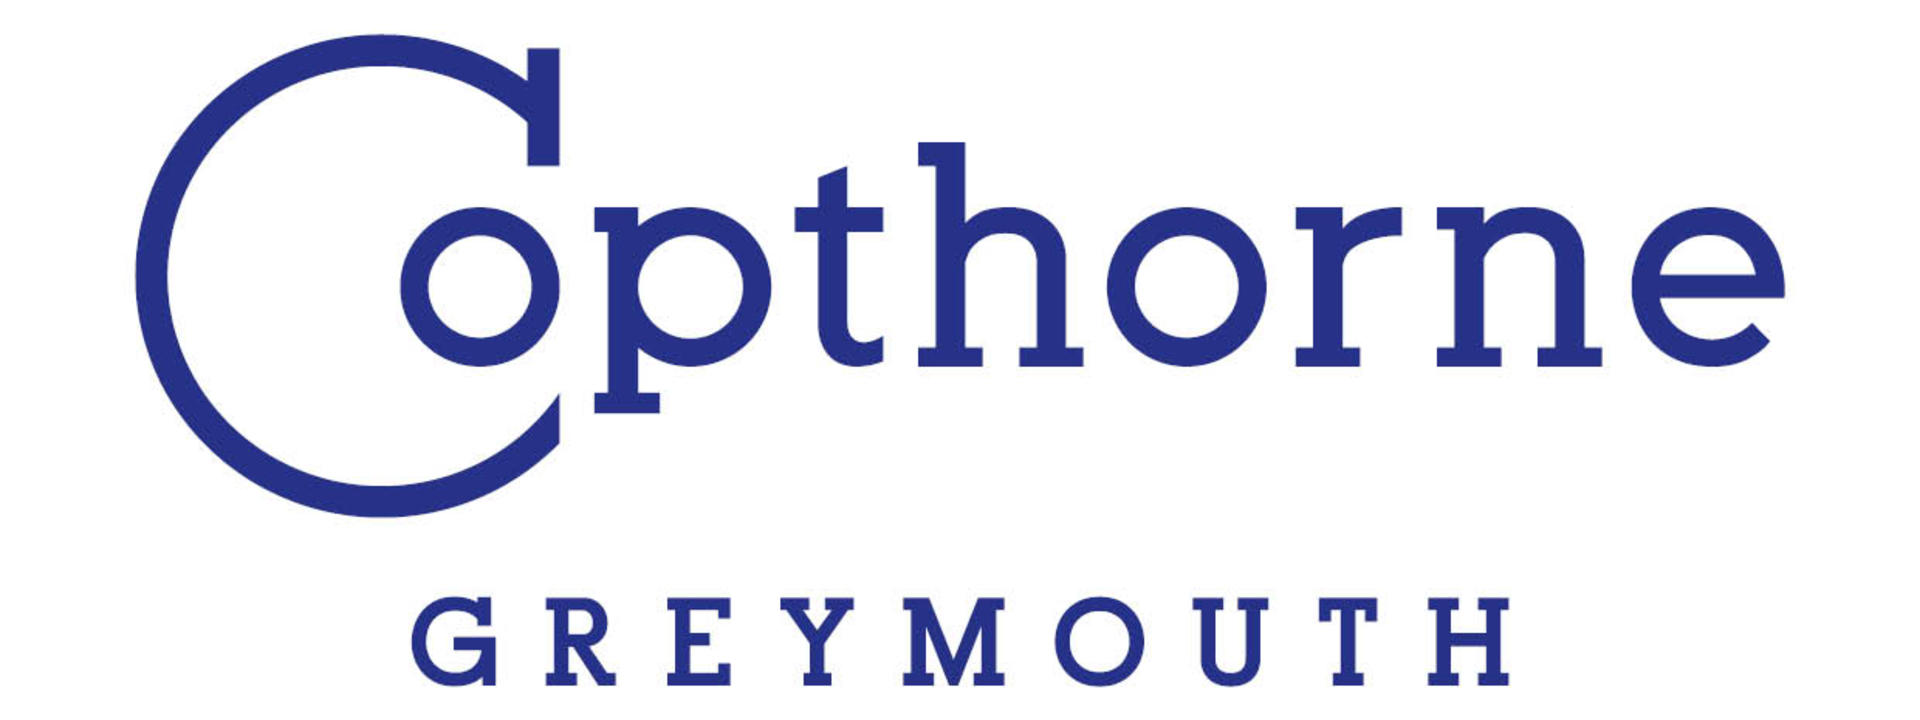 Copthorne Greymouth.jpg